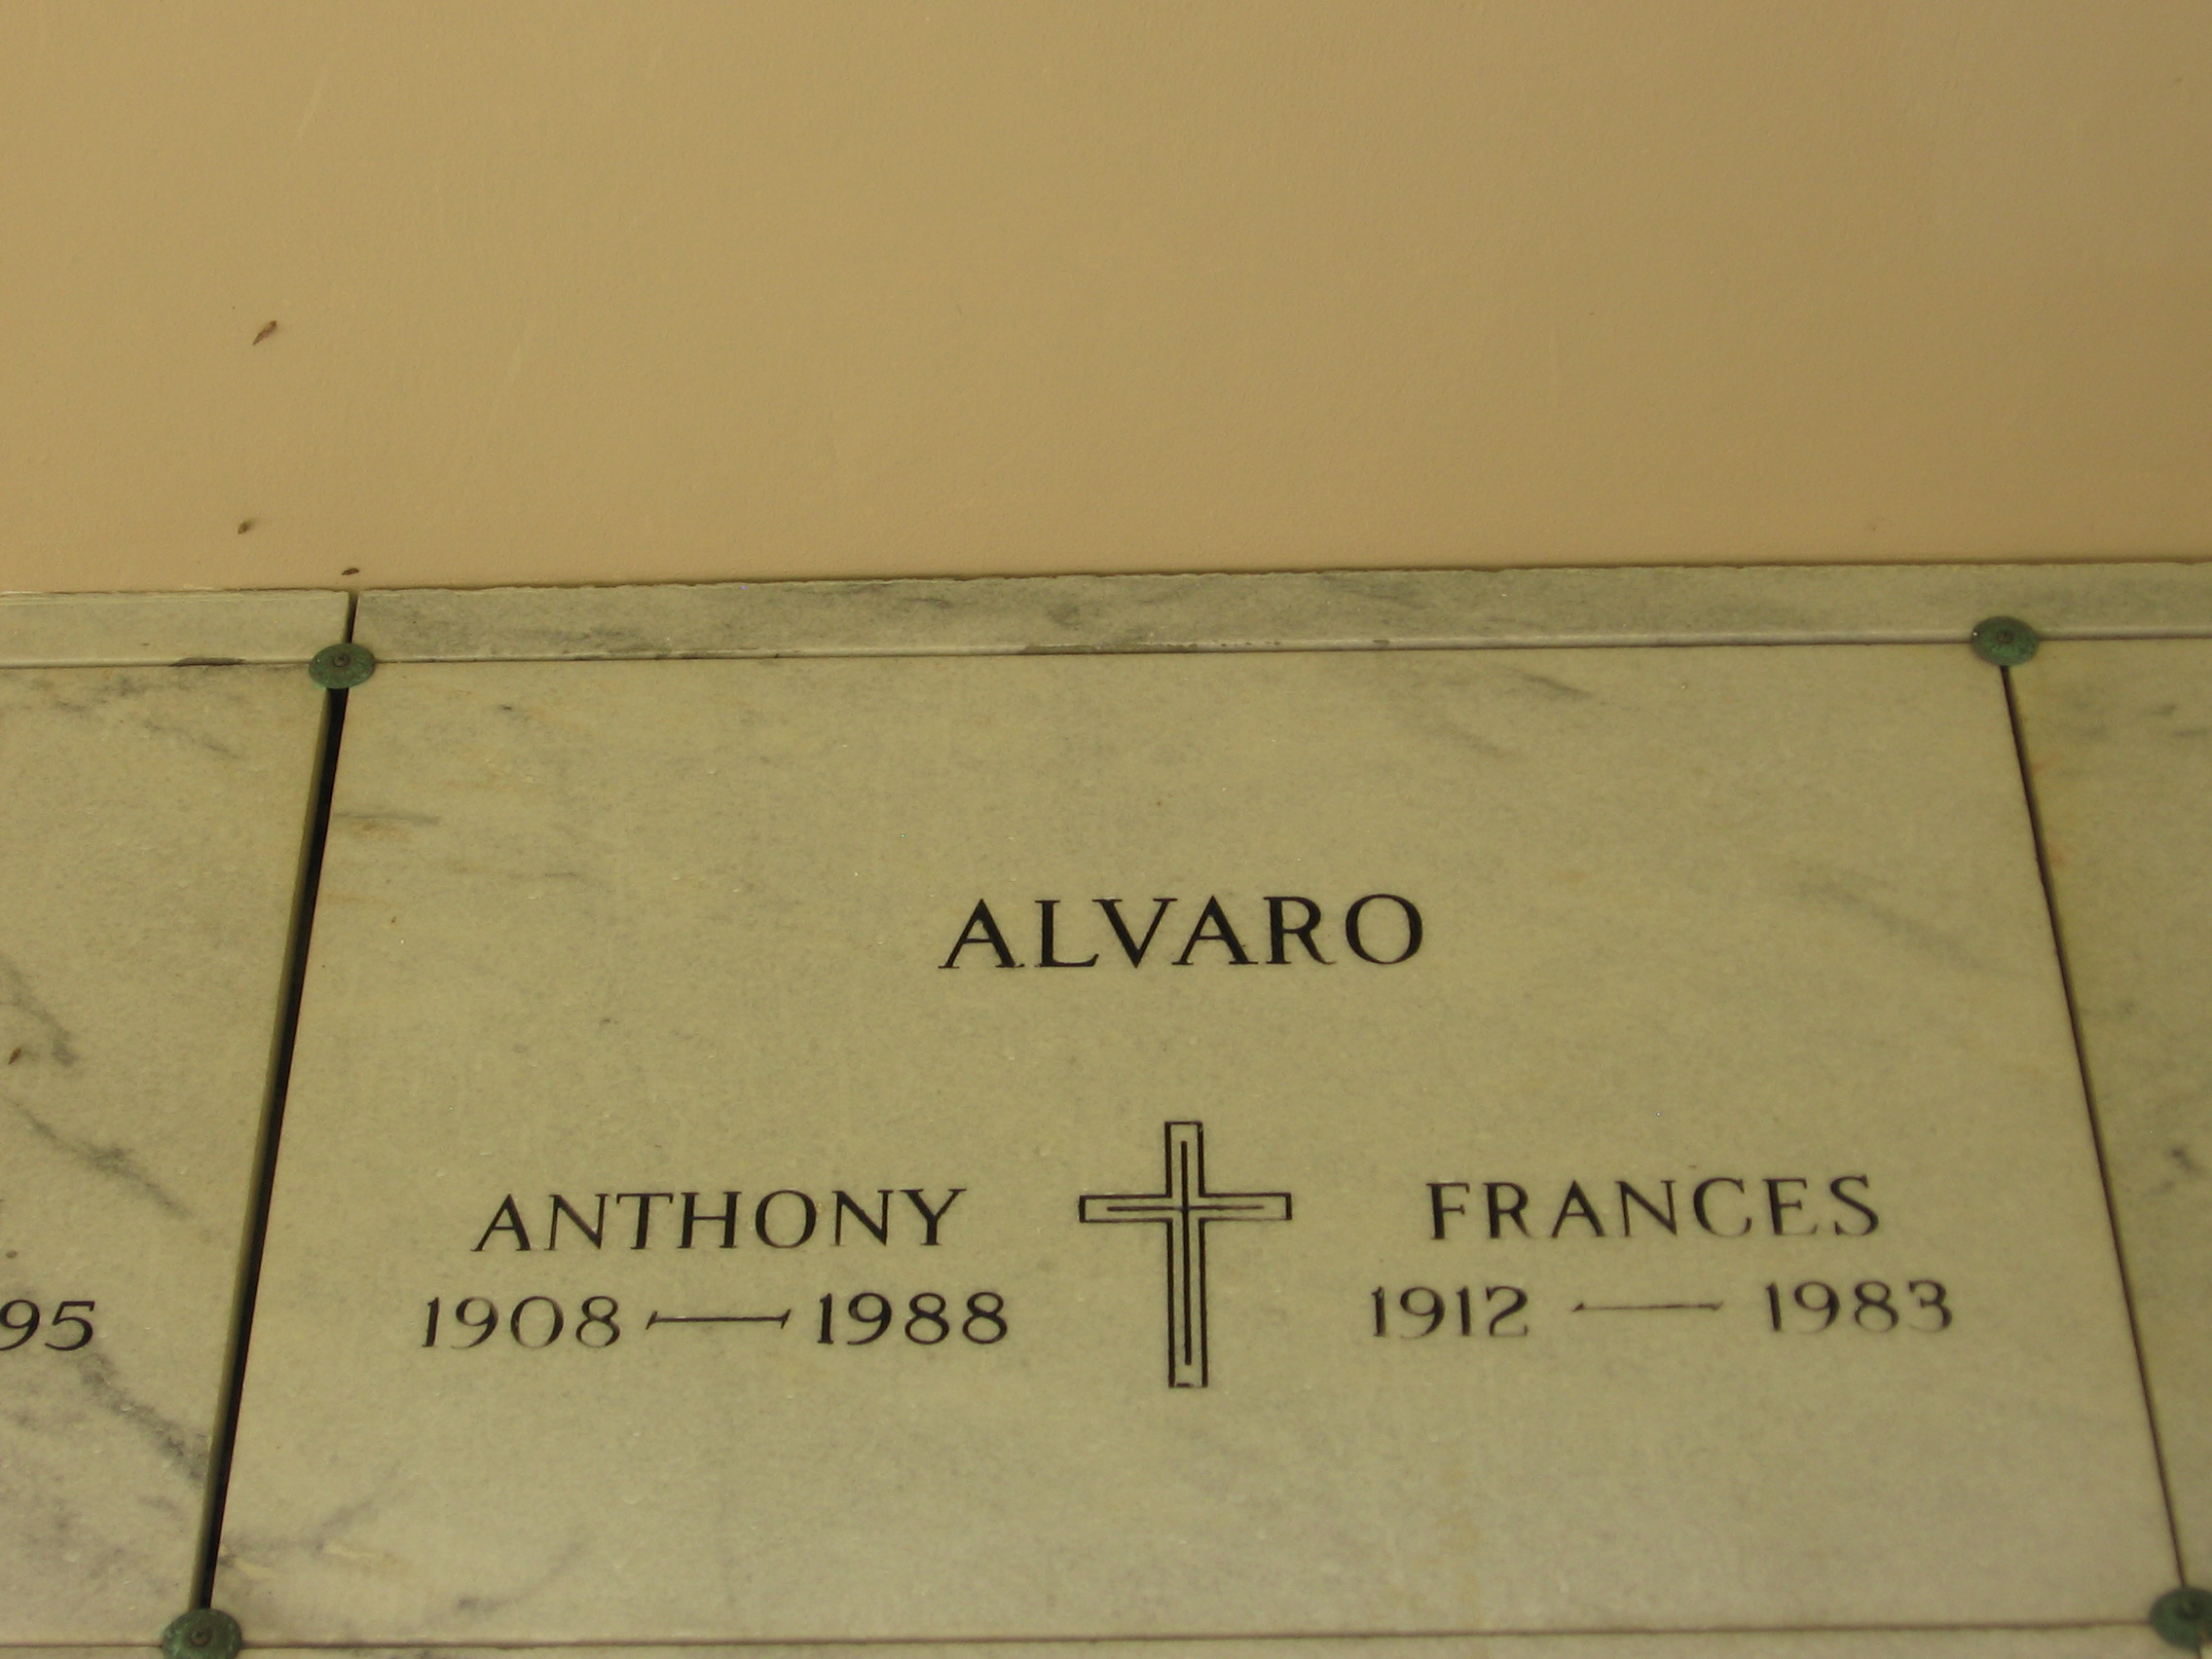 Anthony Alvaro